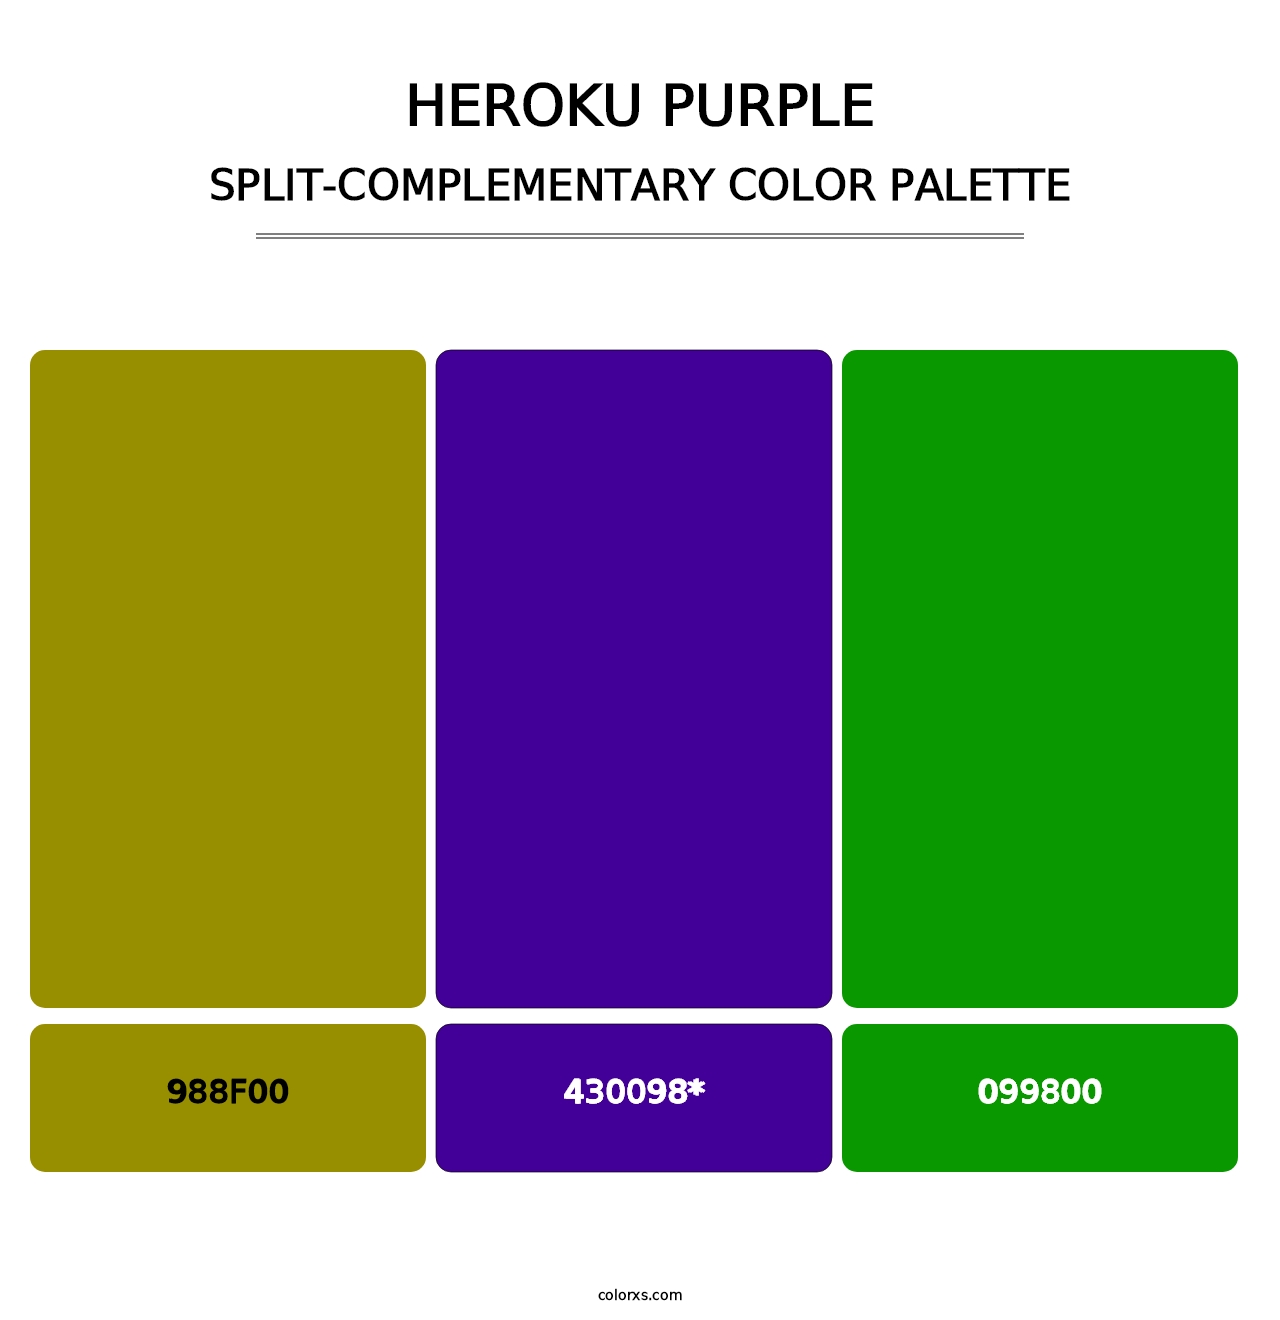 Heroku Purple - Split-Complementary Color Palette